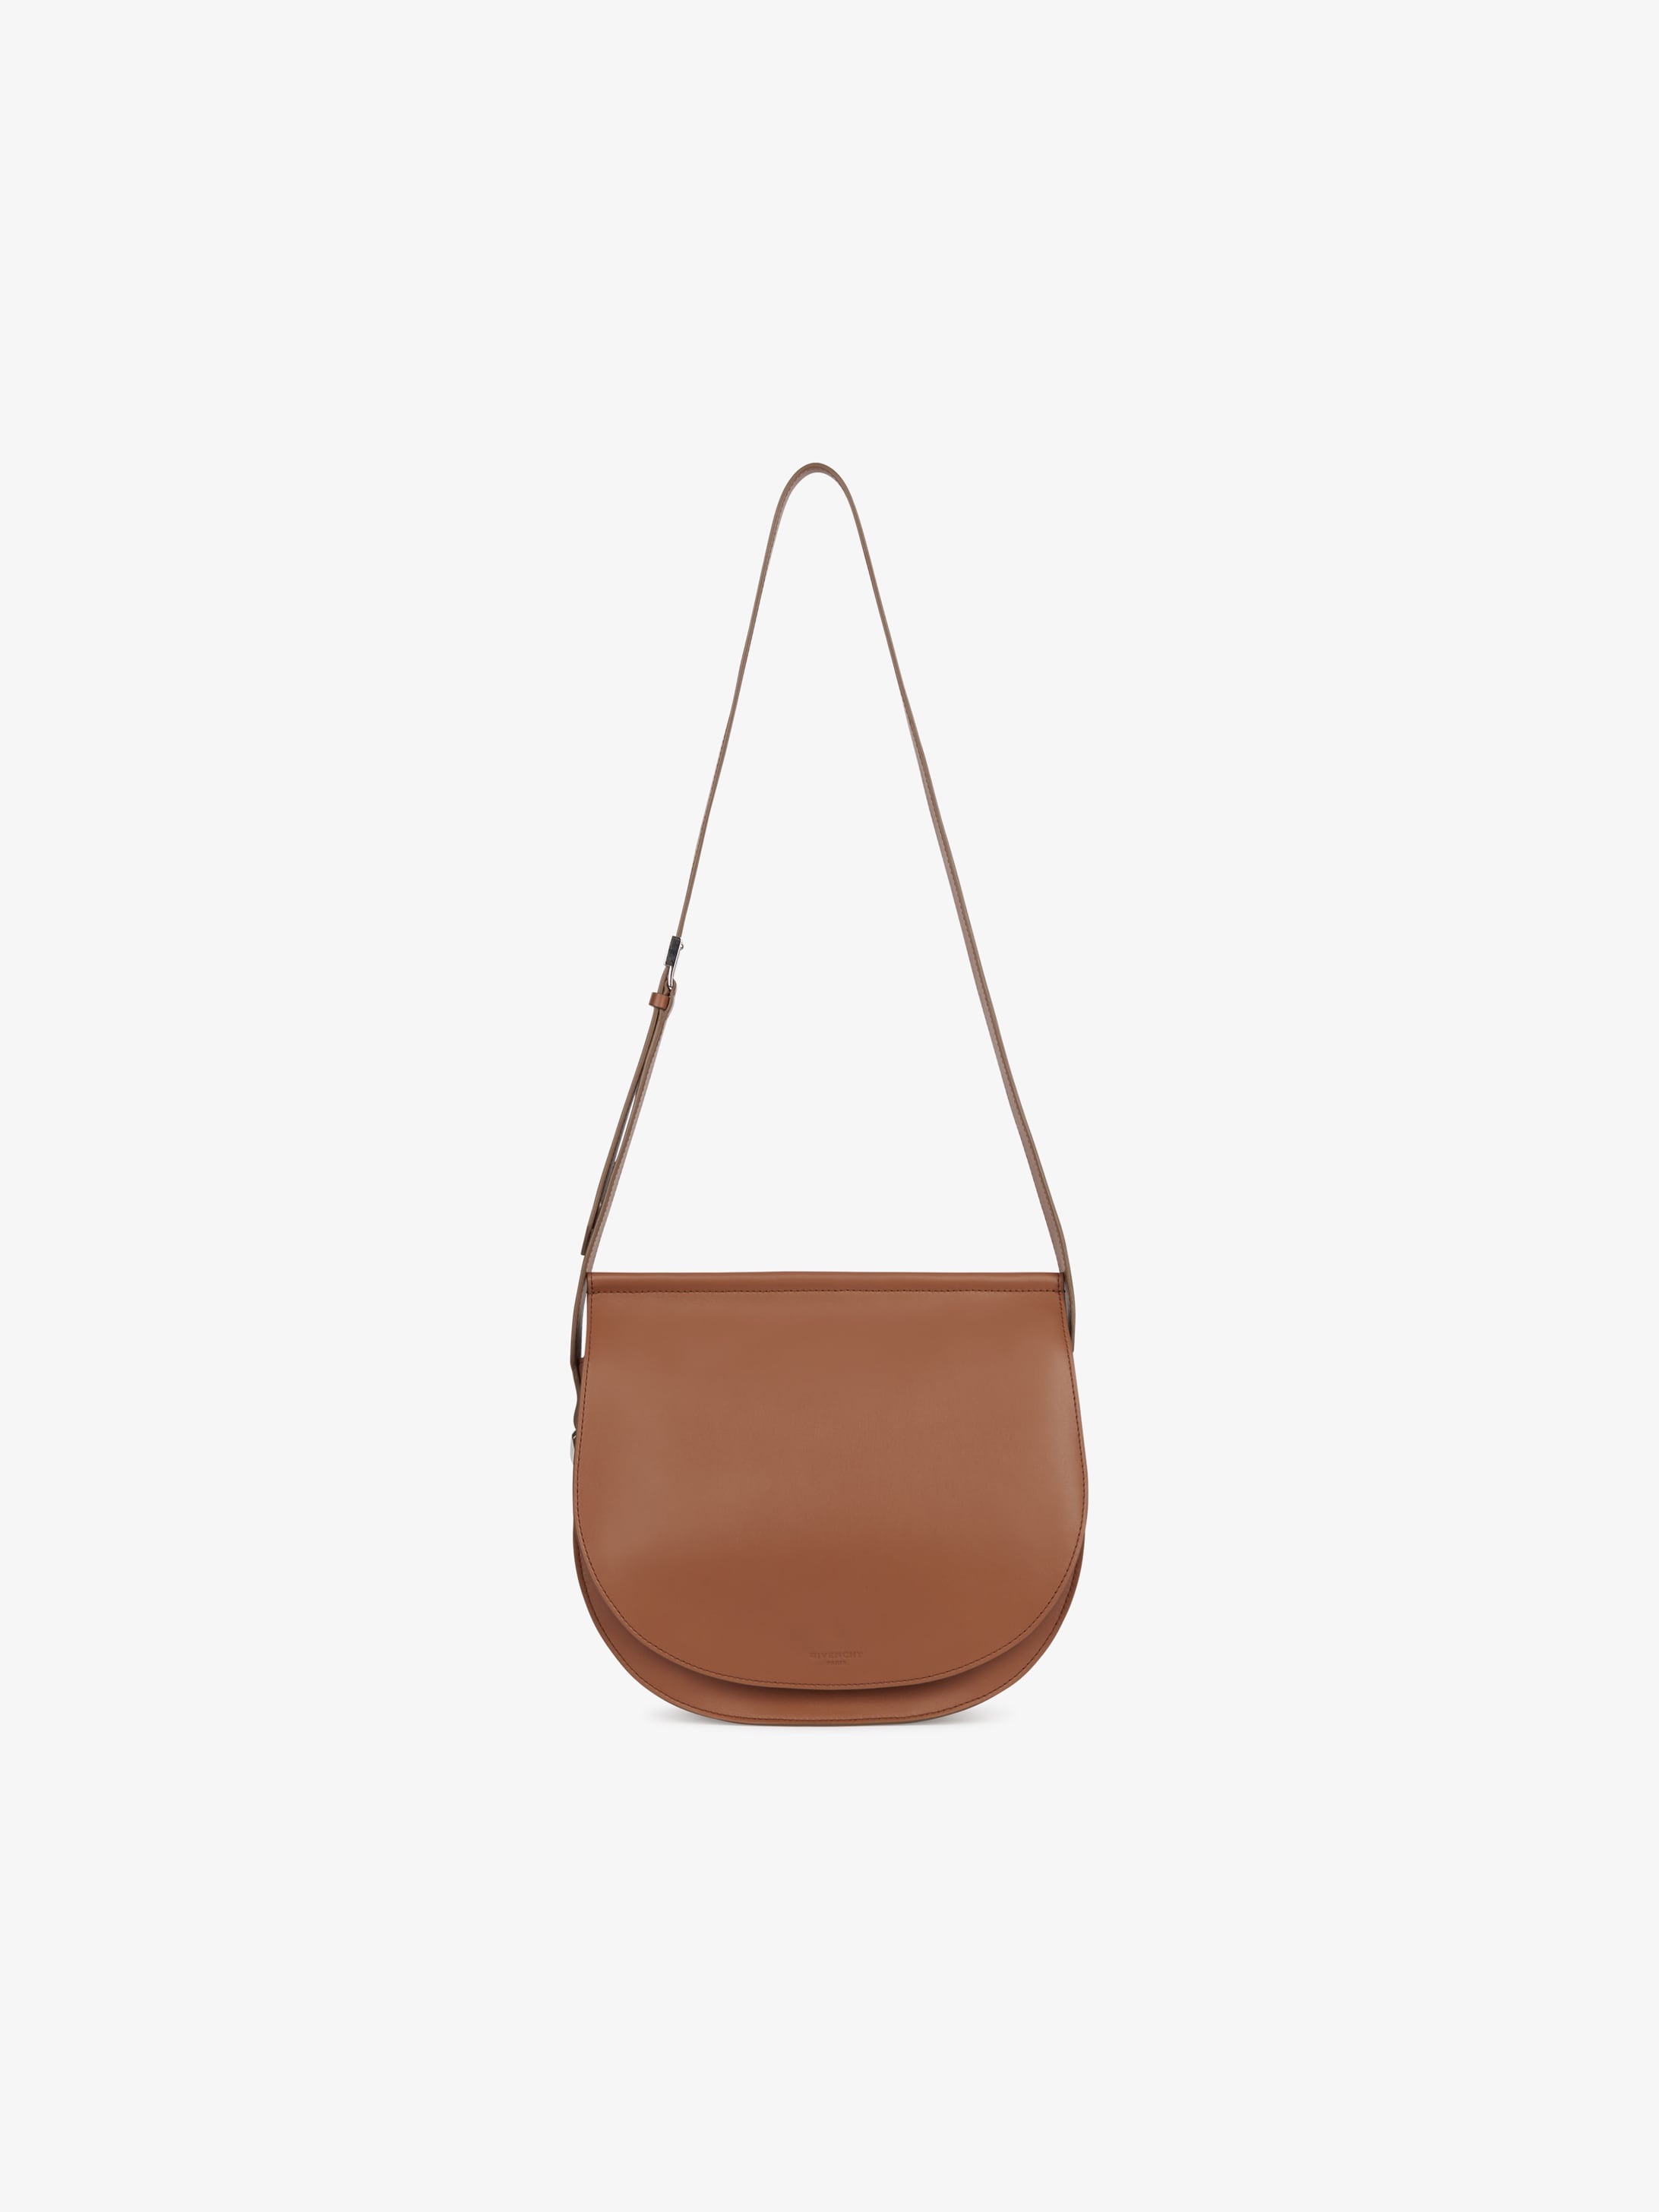 Givenchy Infinity saddle bag | GIVENCHY 